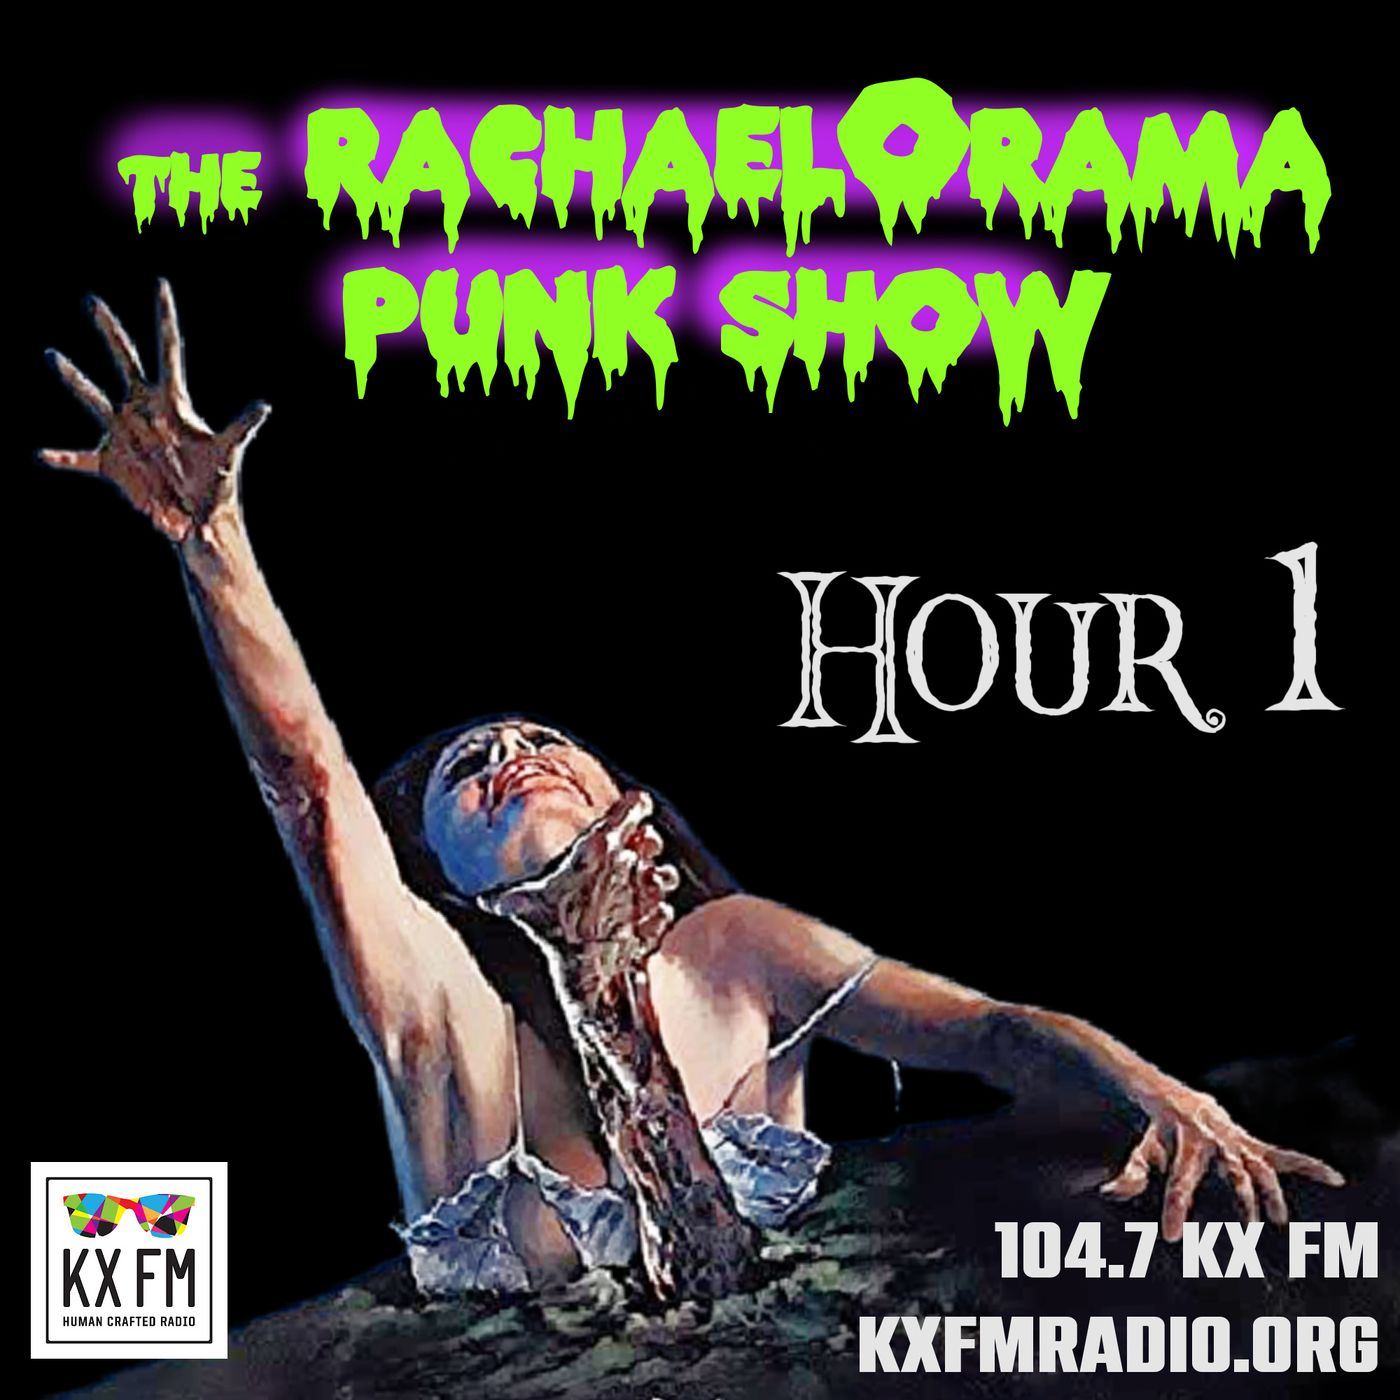 The RachaelORama Punk Show 9:27:23 Hour 1